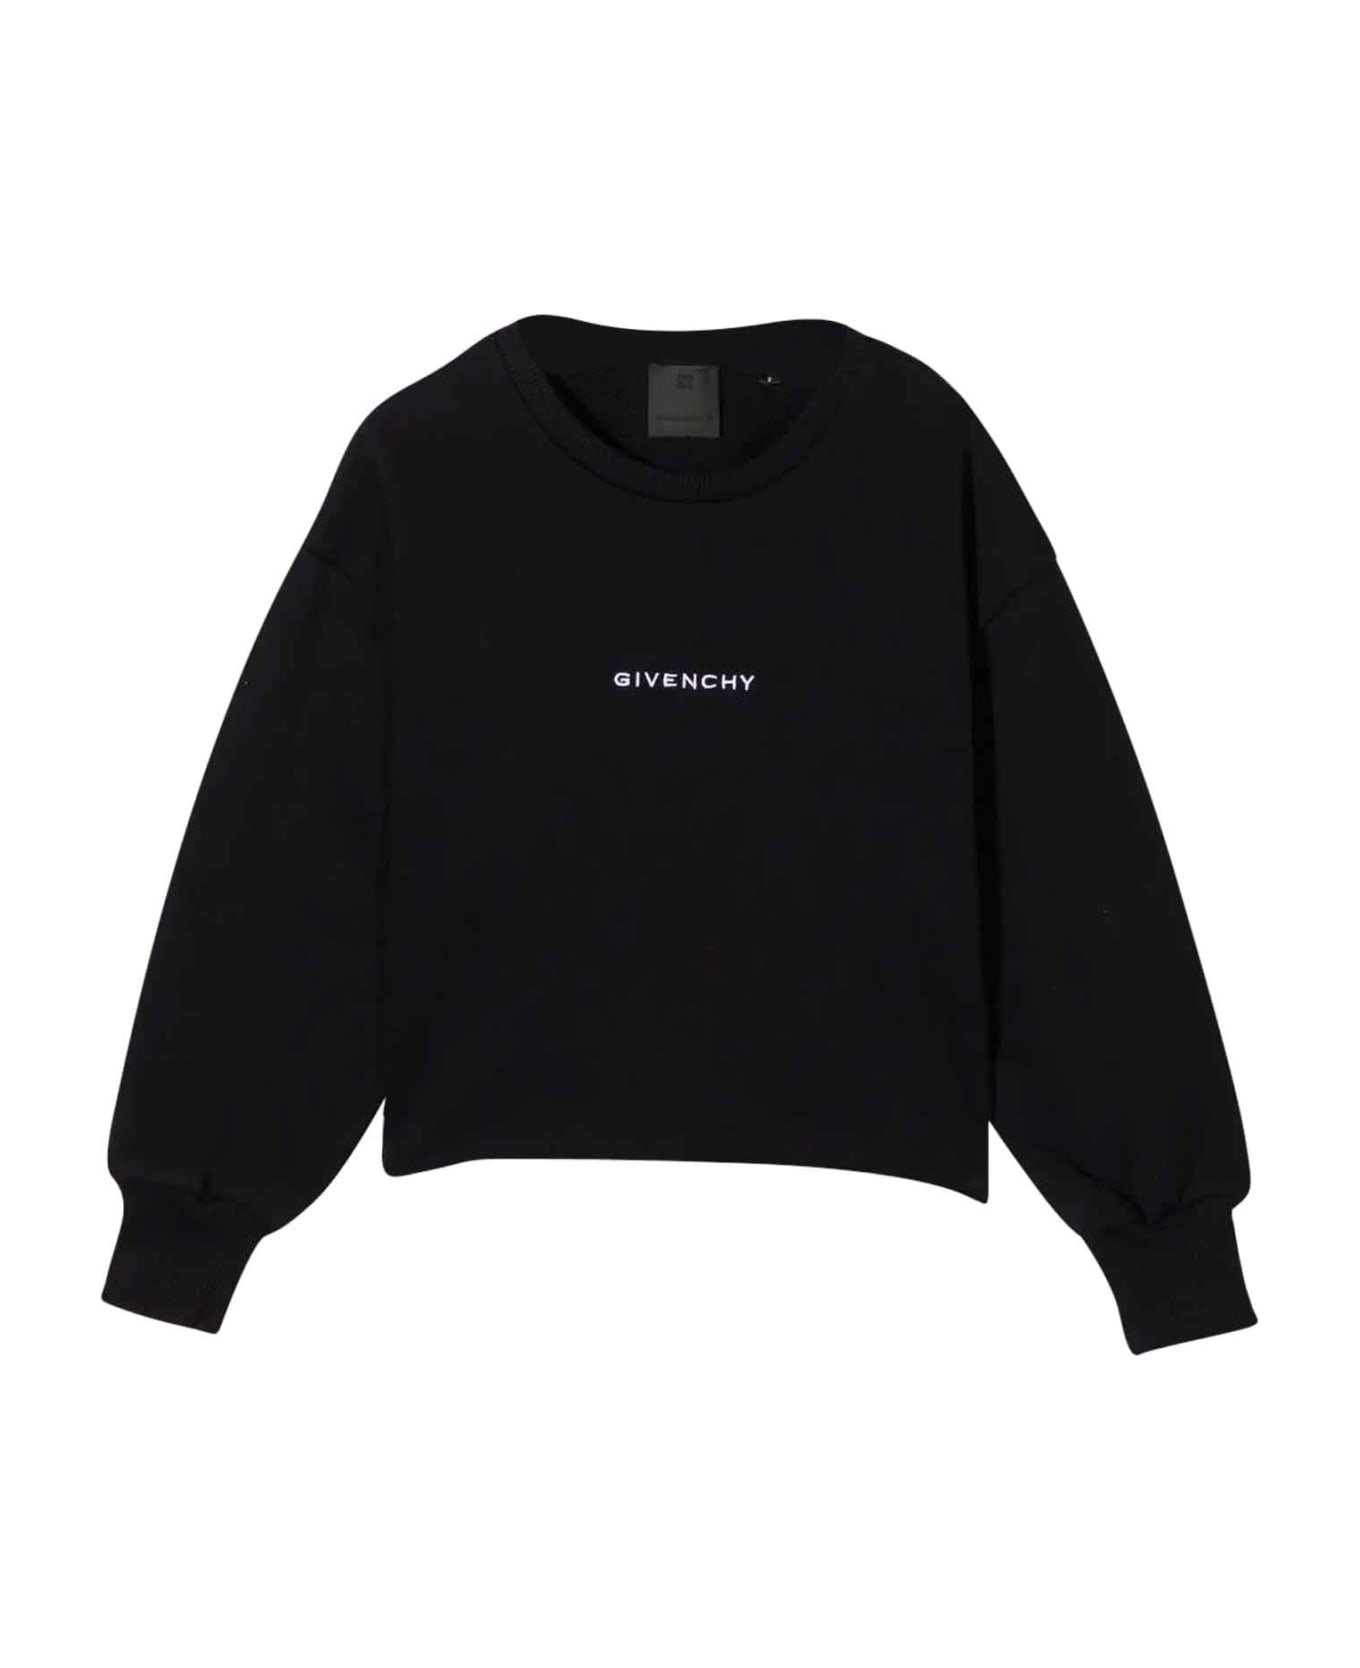 Givenchy Black Sweatshirt With White Print - Nero